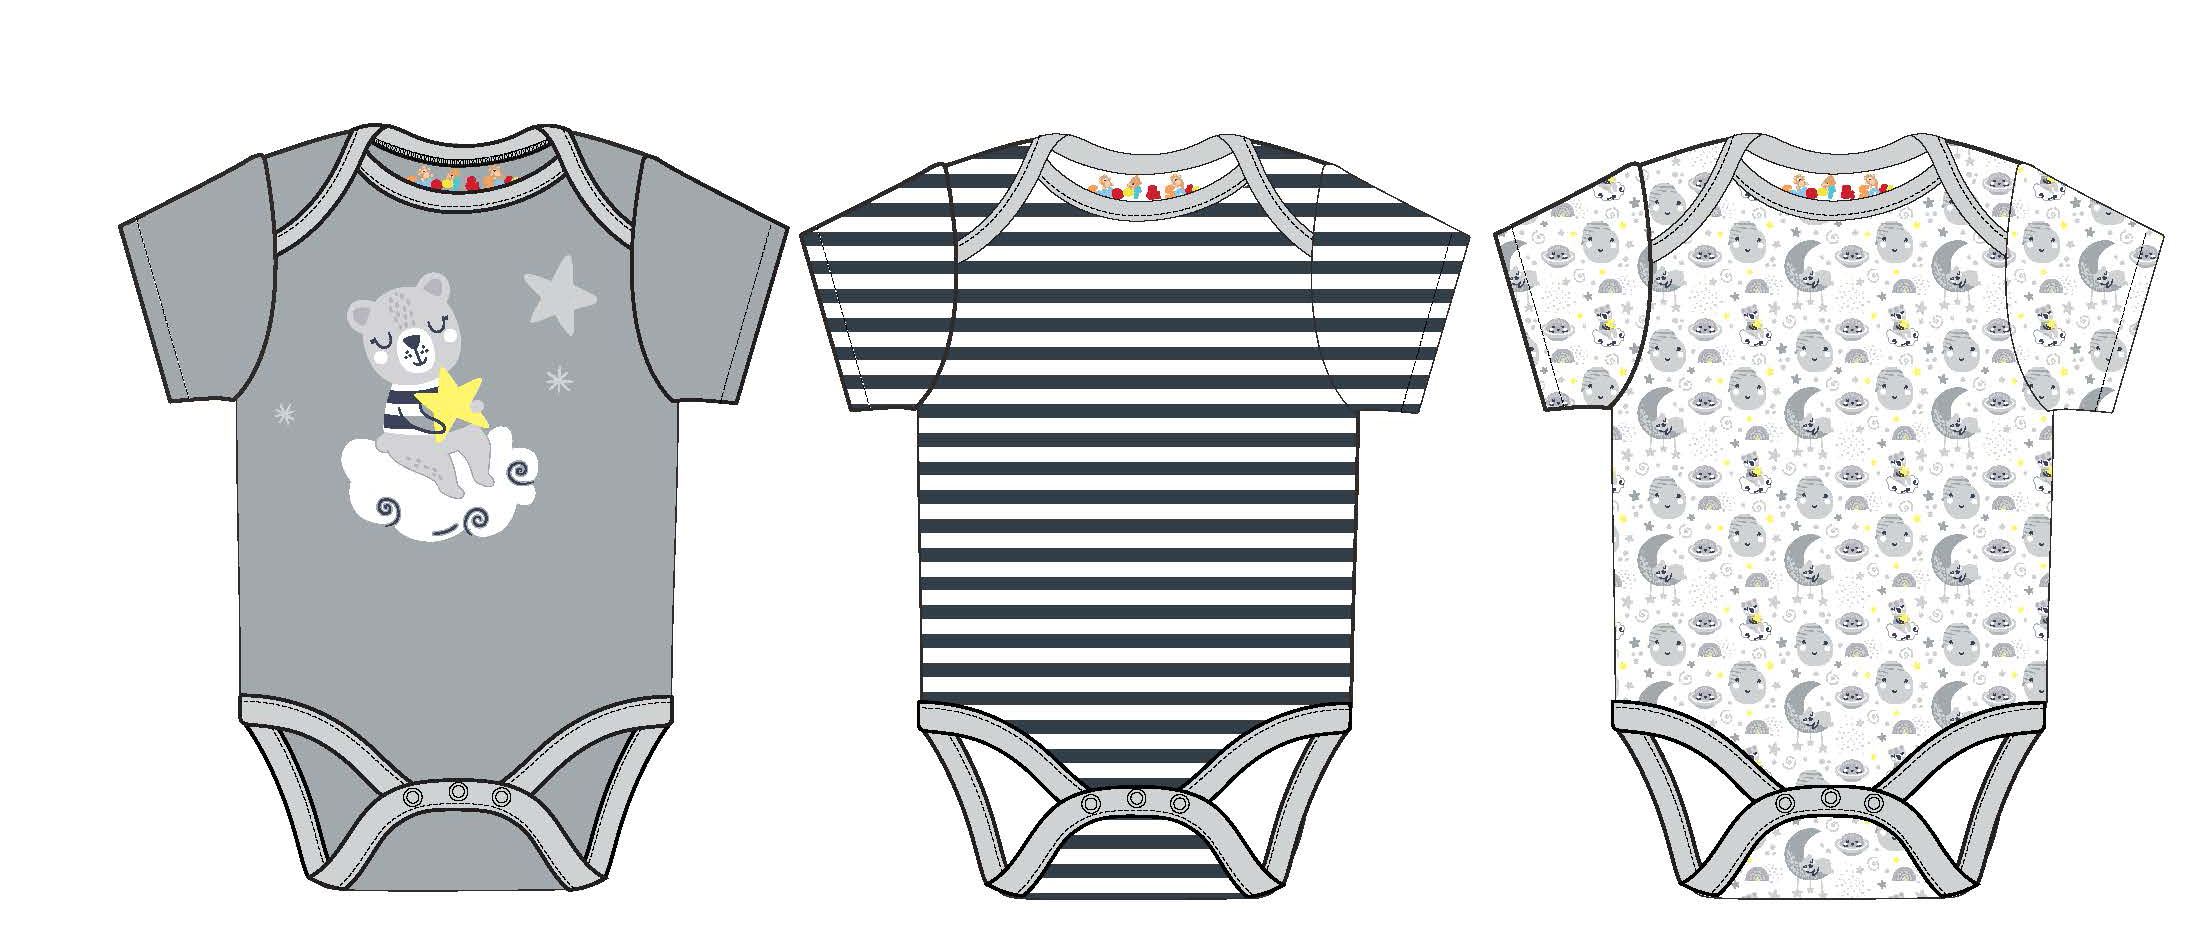 ''Gender Neutral Baby's Printed Short-Sleeve Onesie w/ Stripes, Night Sky, Embroidered Bear Print - S